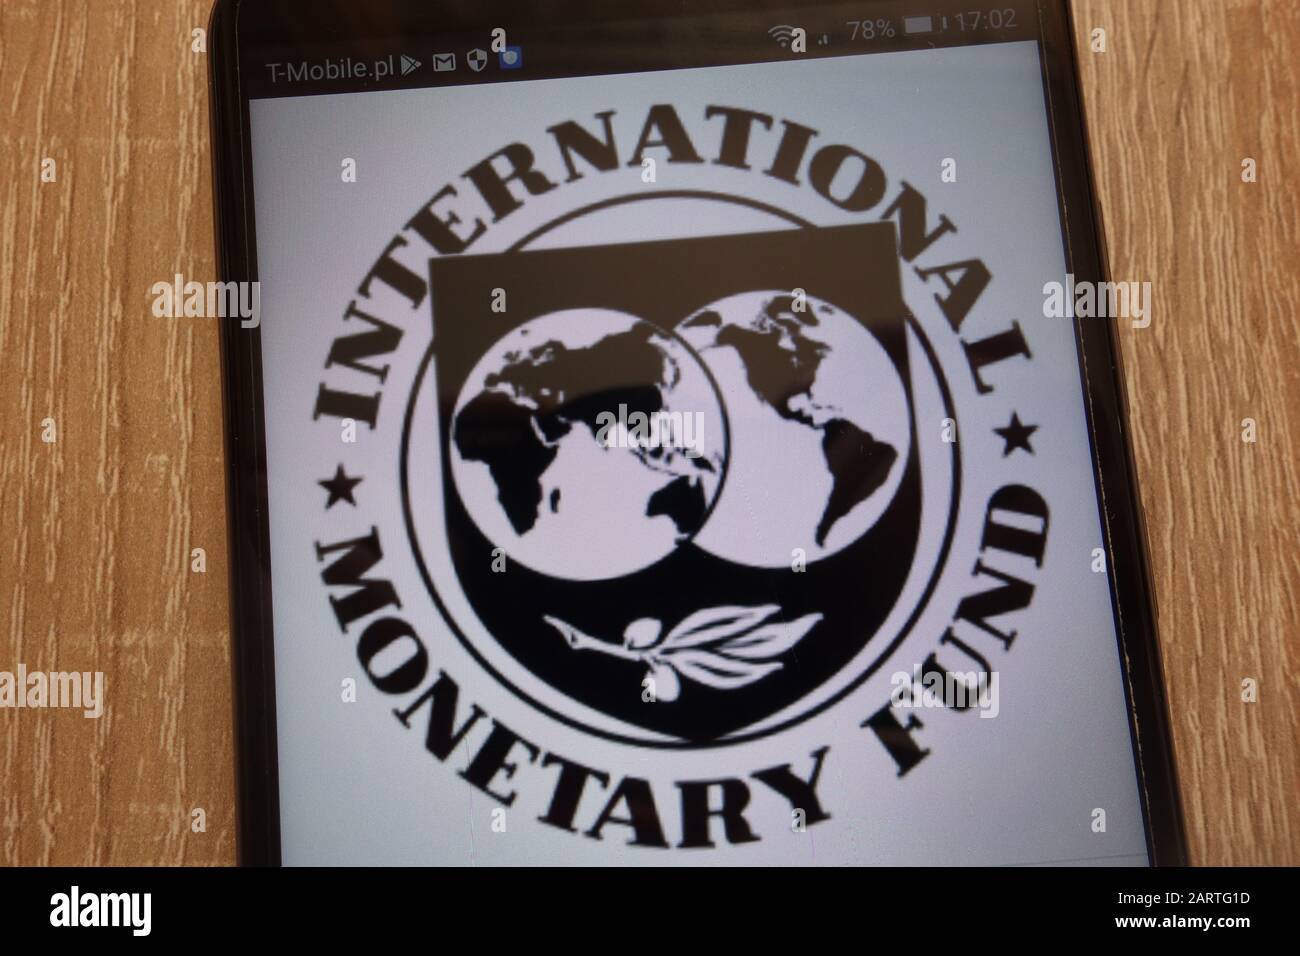 International Monetary Fund logo displayed on a modern smartphone Stock Photo